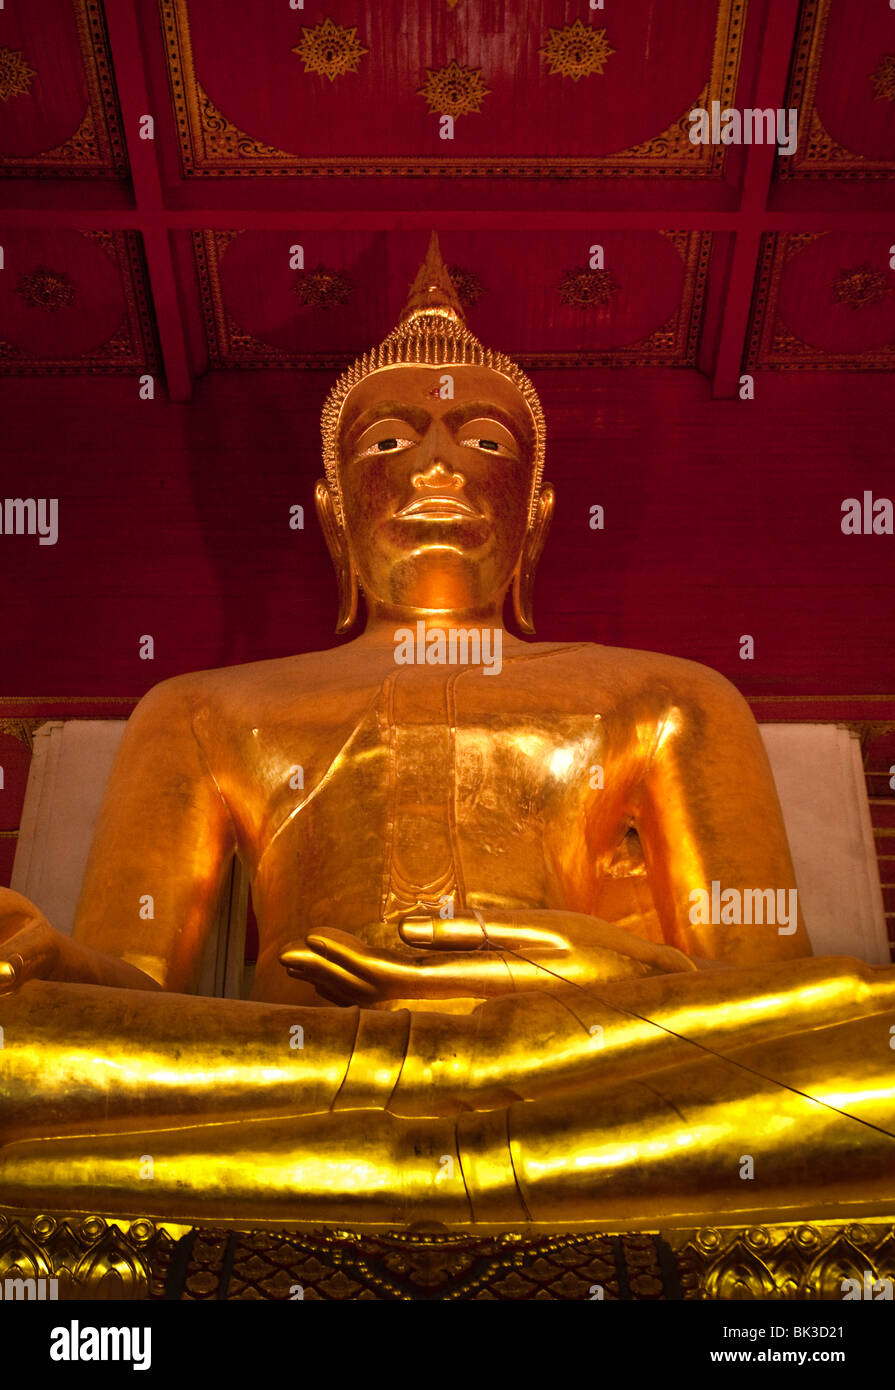 Golden Buddha statue at Wat Phra Sri Sanpetch Buddhist temple in Ayutthaya, Thailand. Stock Photo